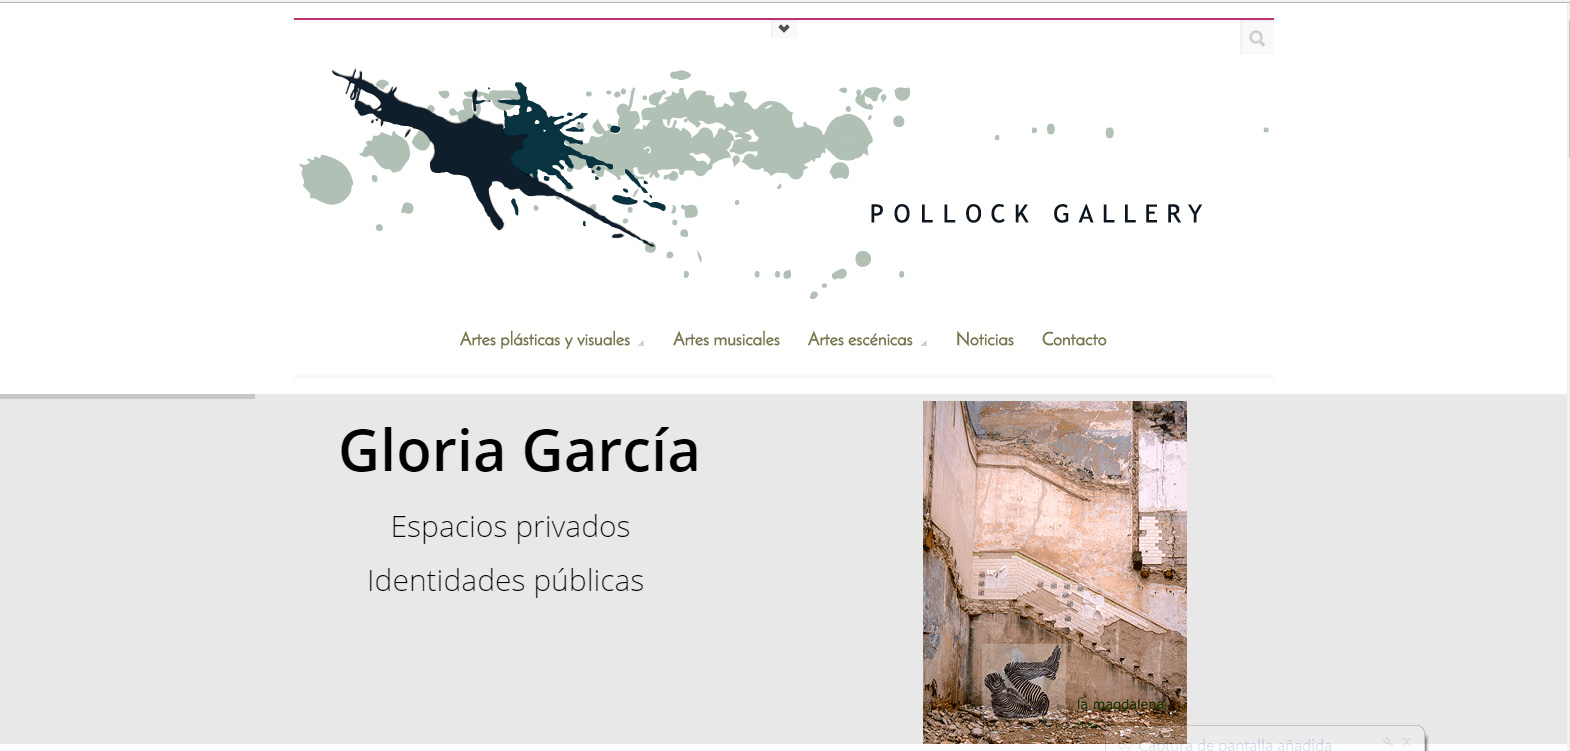 pollock-gallery